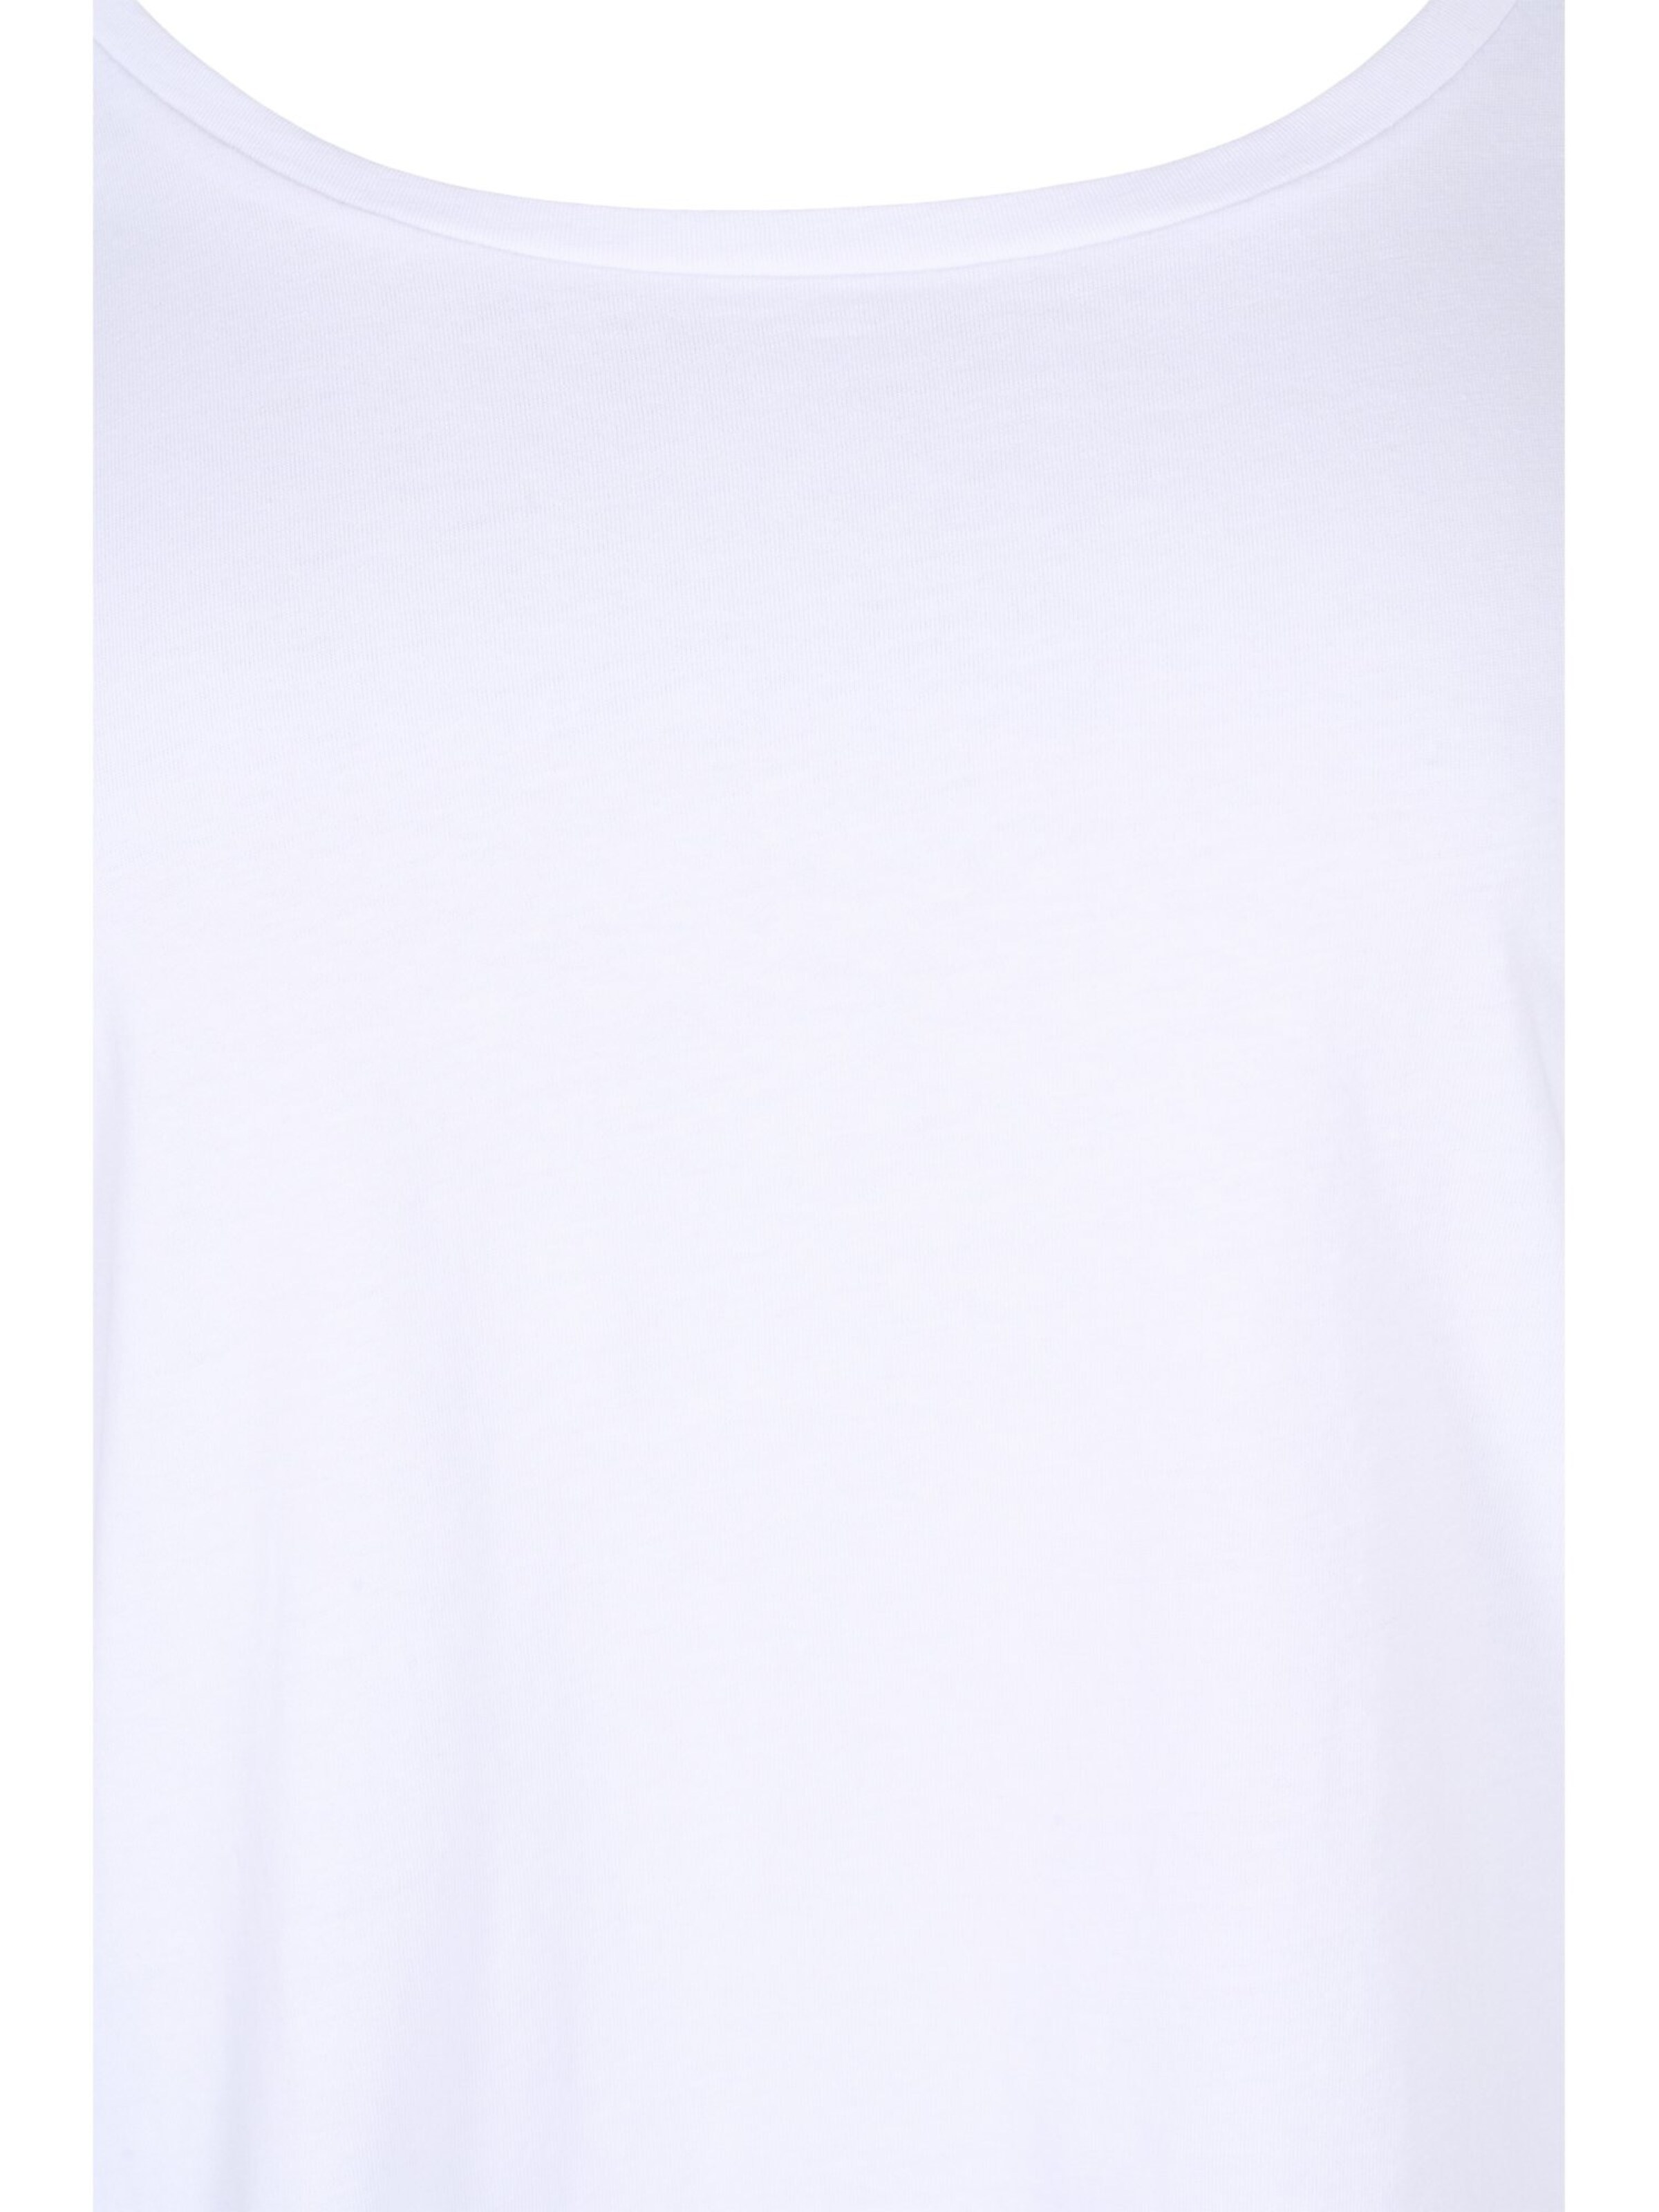 Frauen Shirts & Tops Zizzi Shirt in Schwarz, Weiß - CU11561